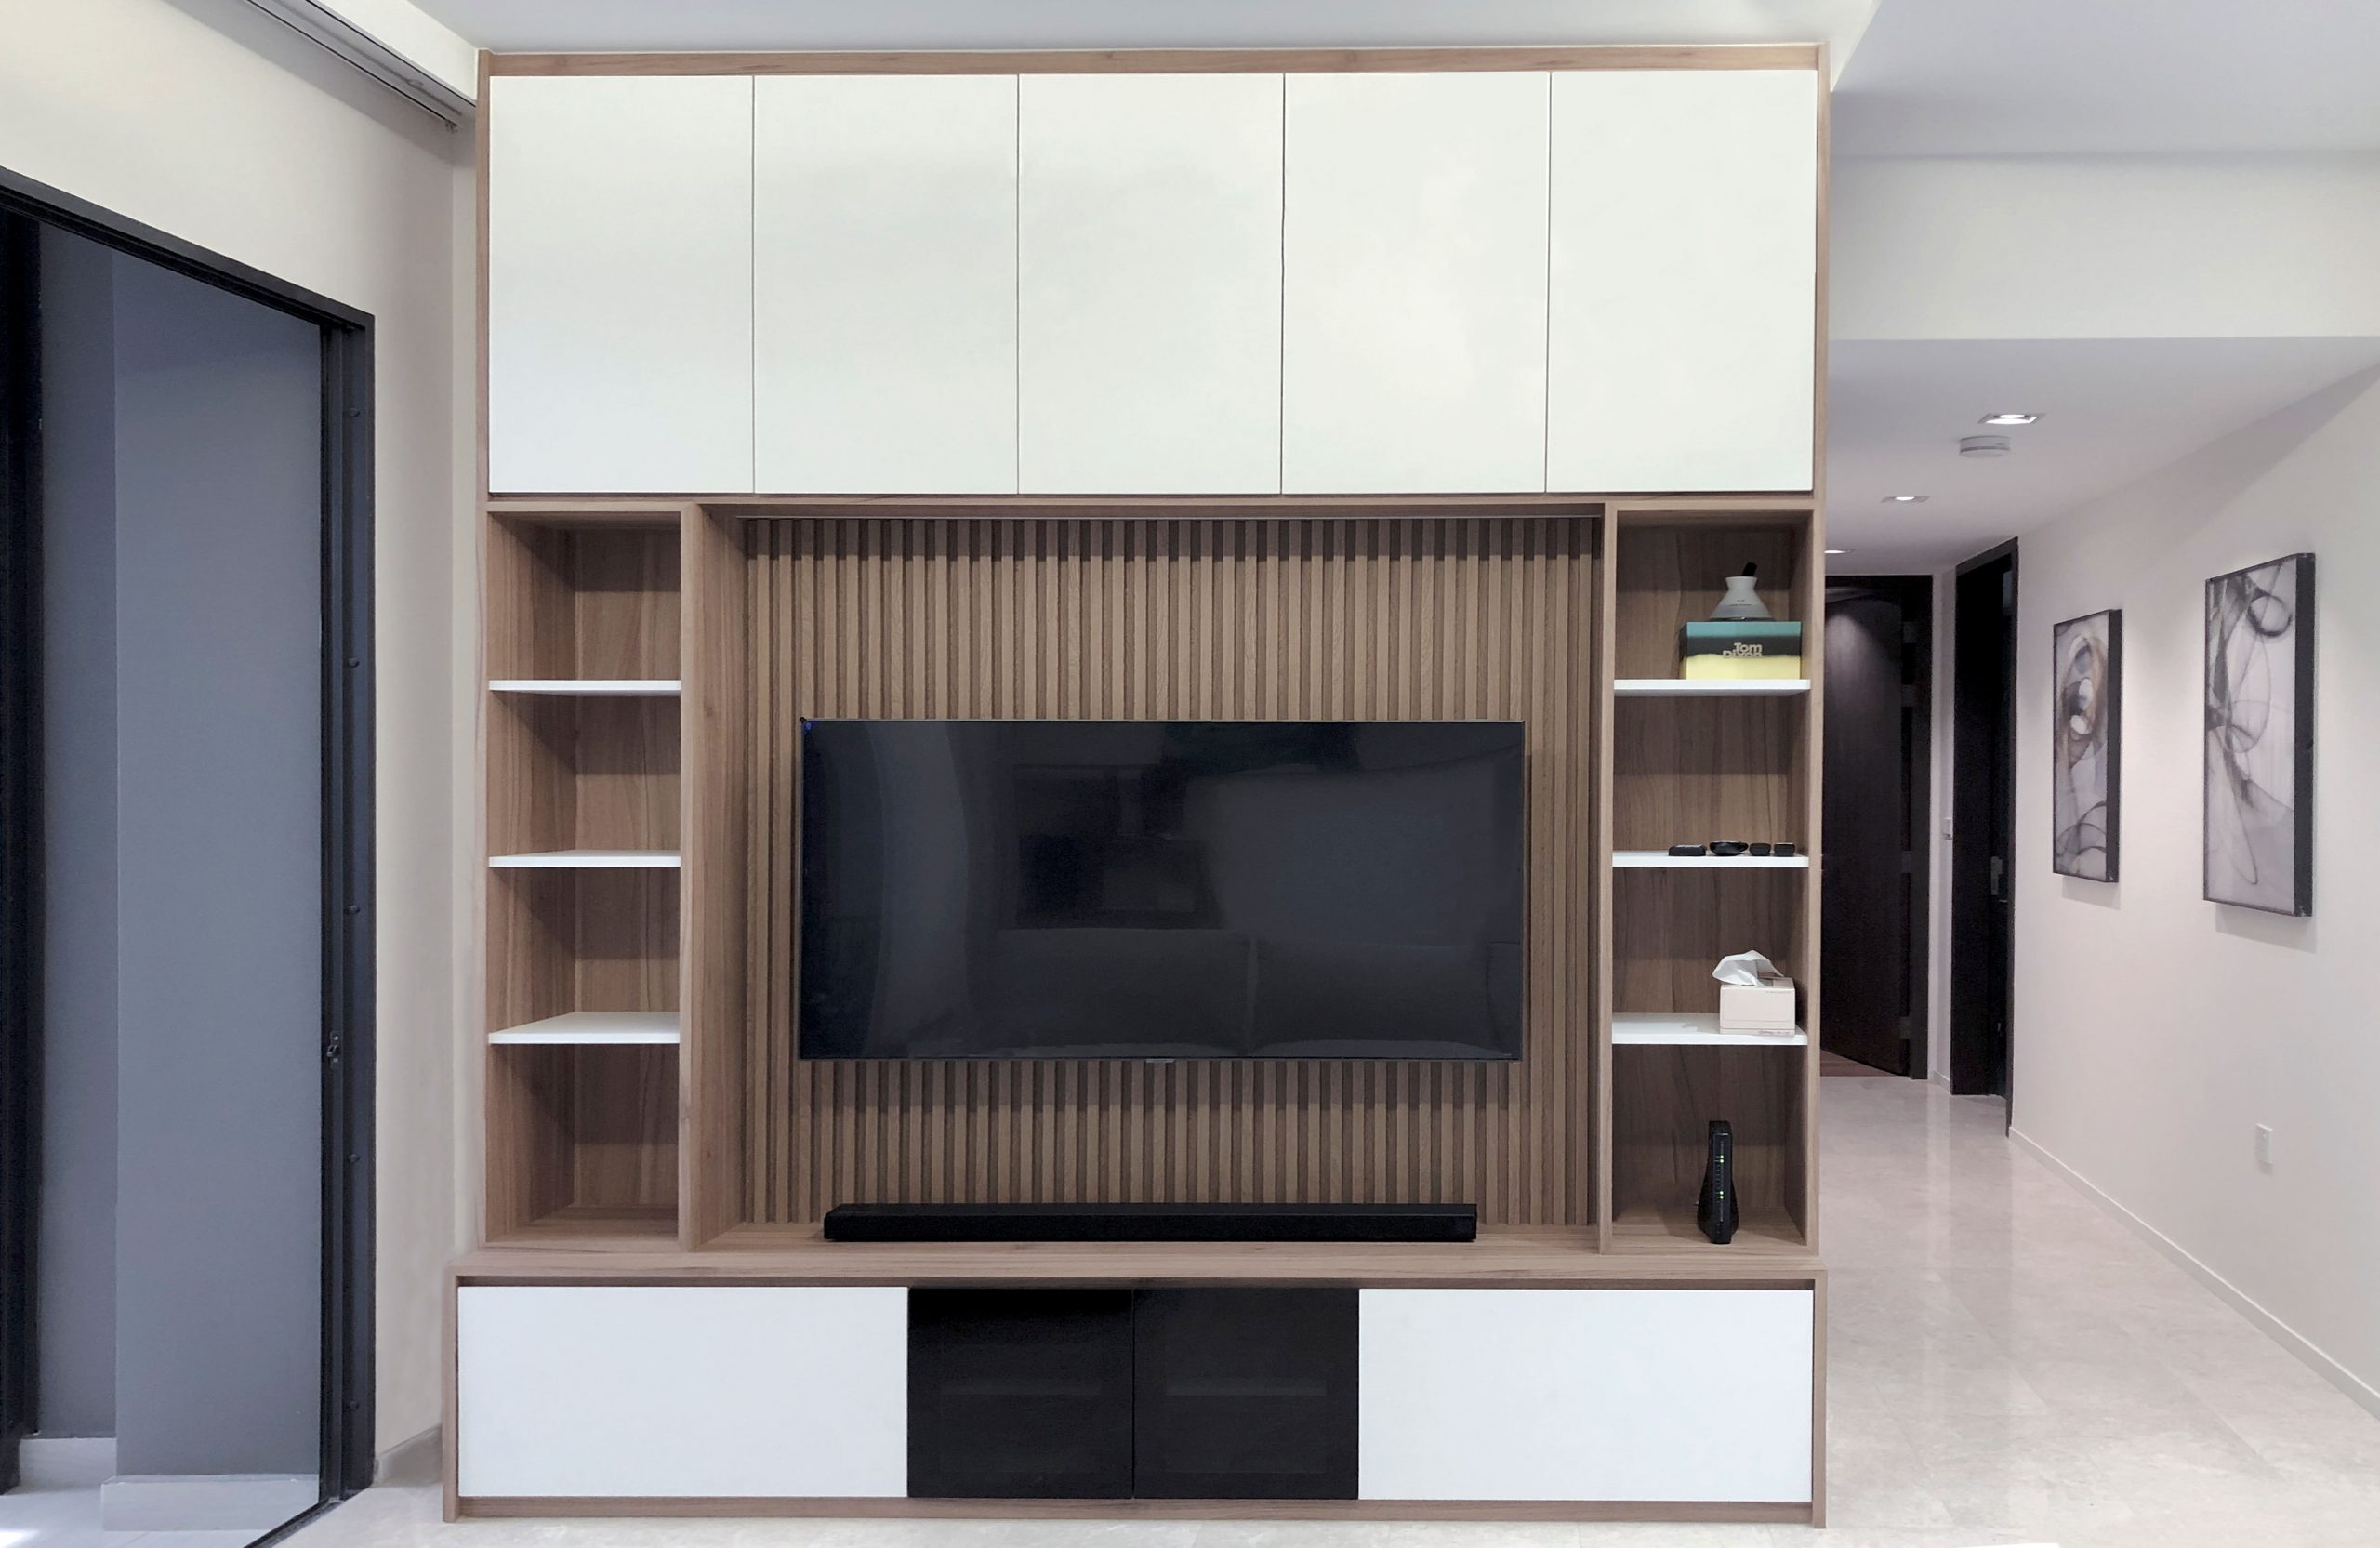 Living Room Condo Interior Design for TV Feature Wall